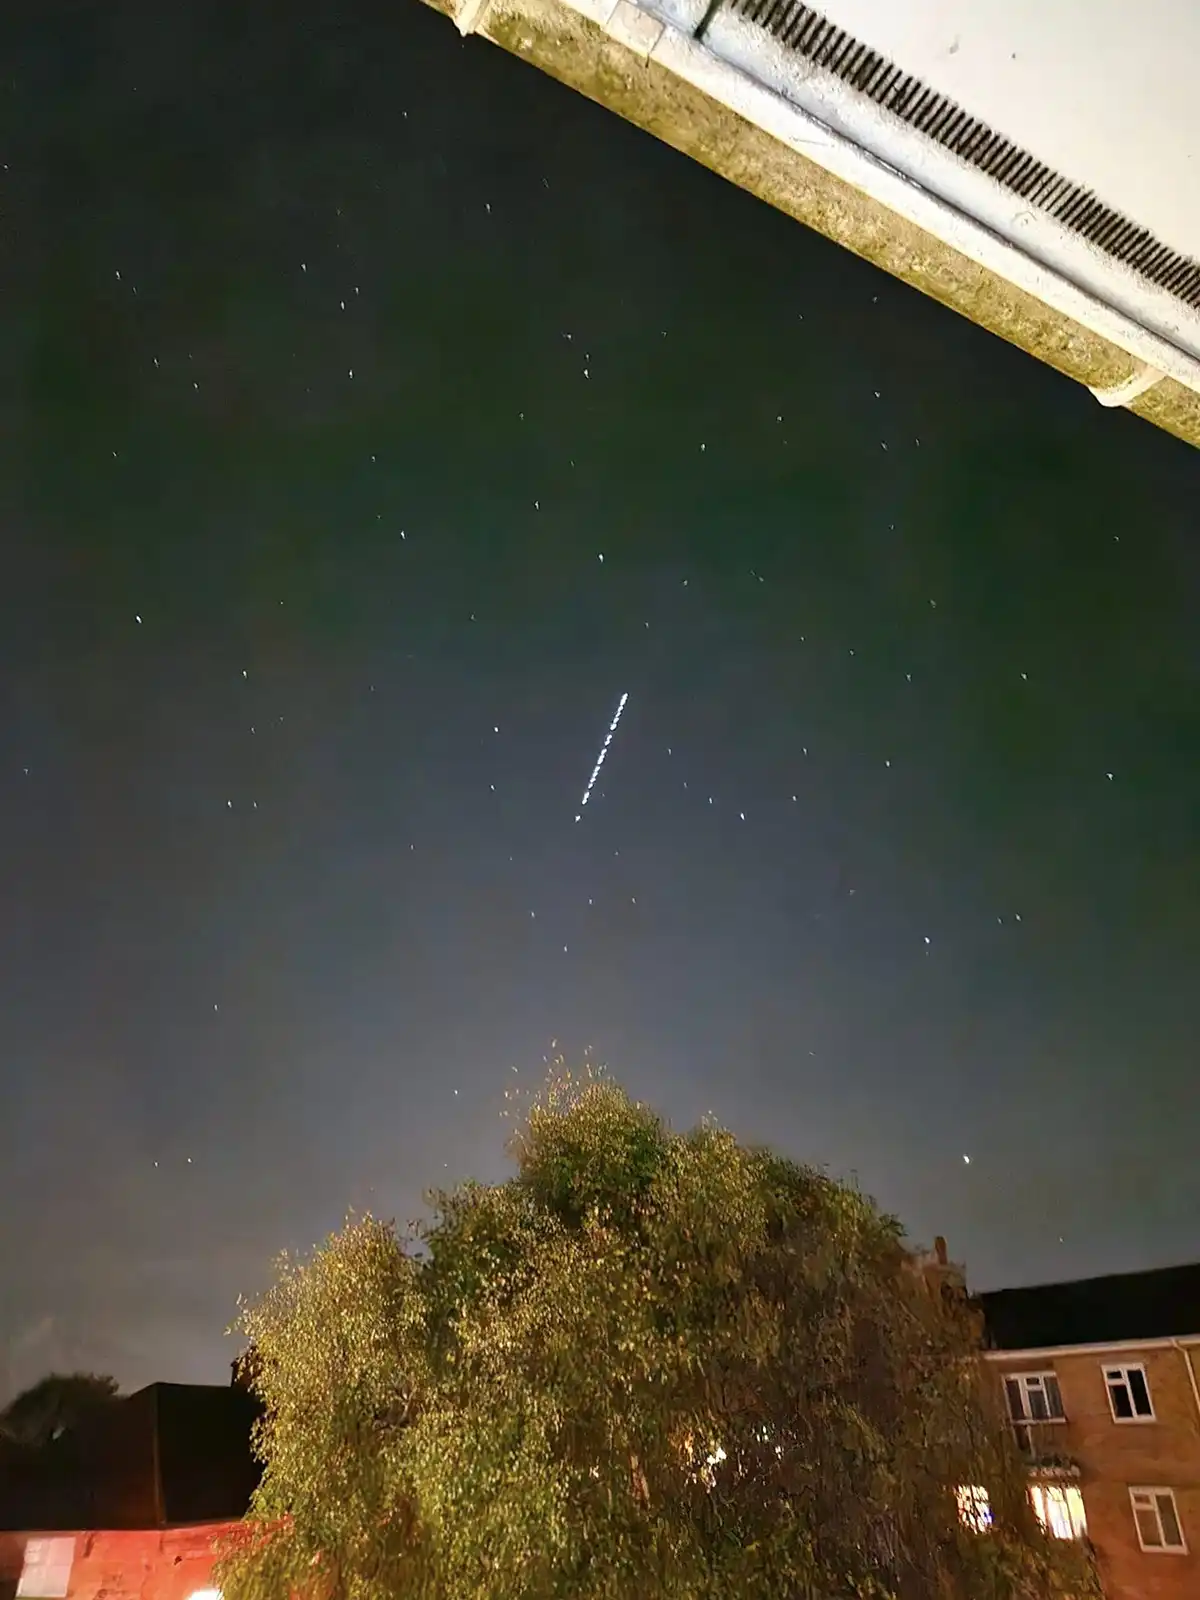 The Starlink satellites over Sherborne on Sunday evening